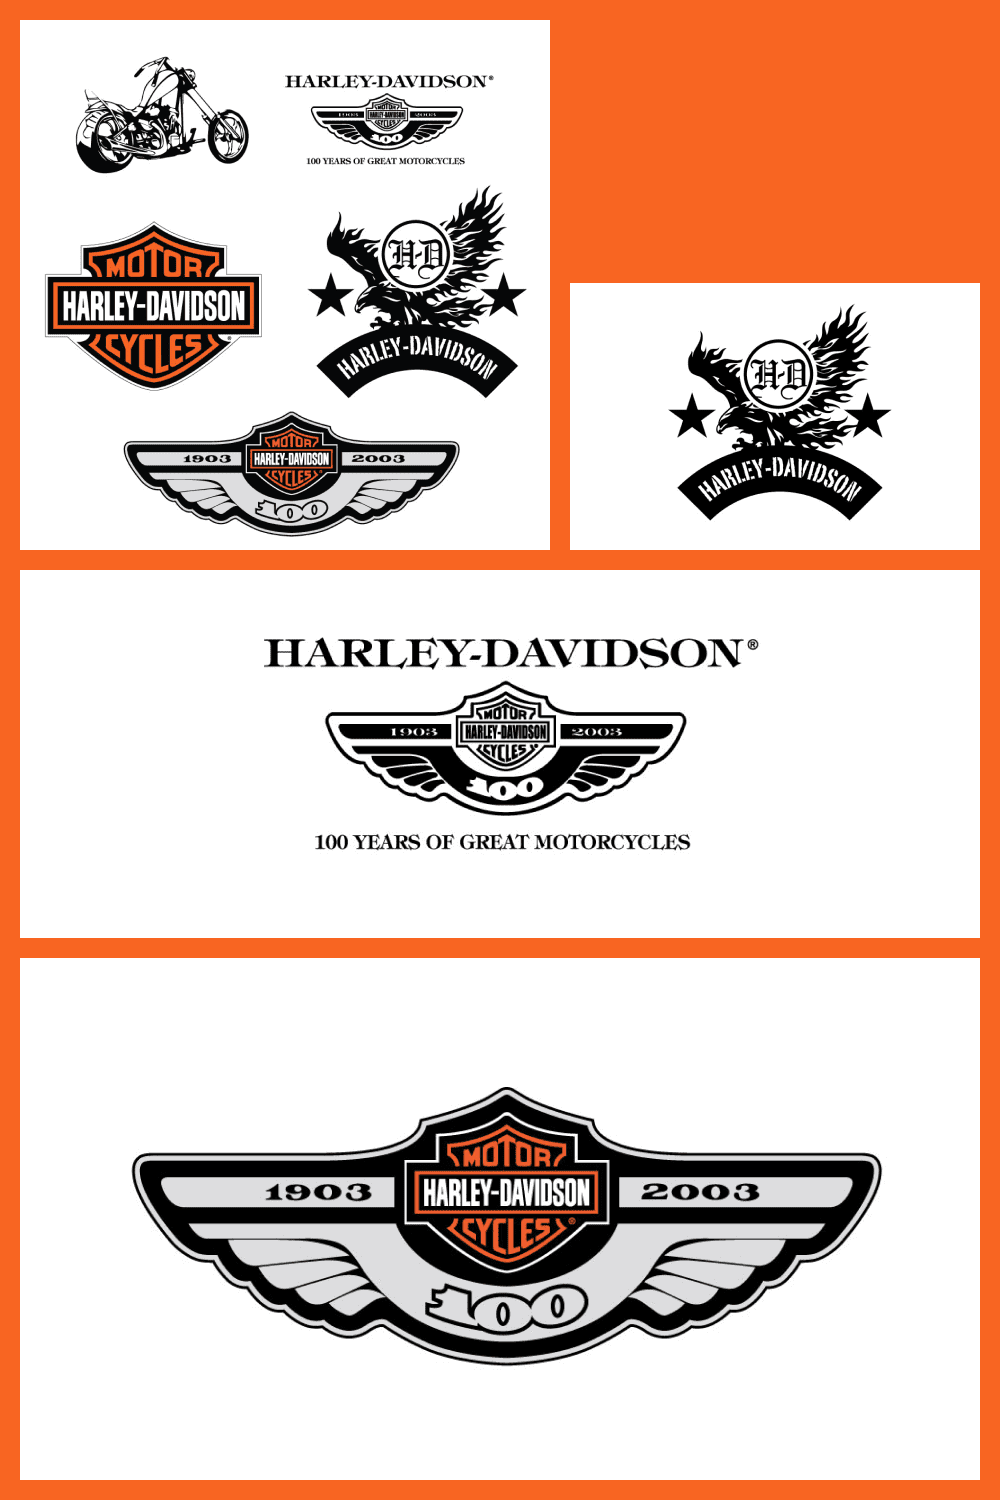 Harley Davidson logo and bike SVG.